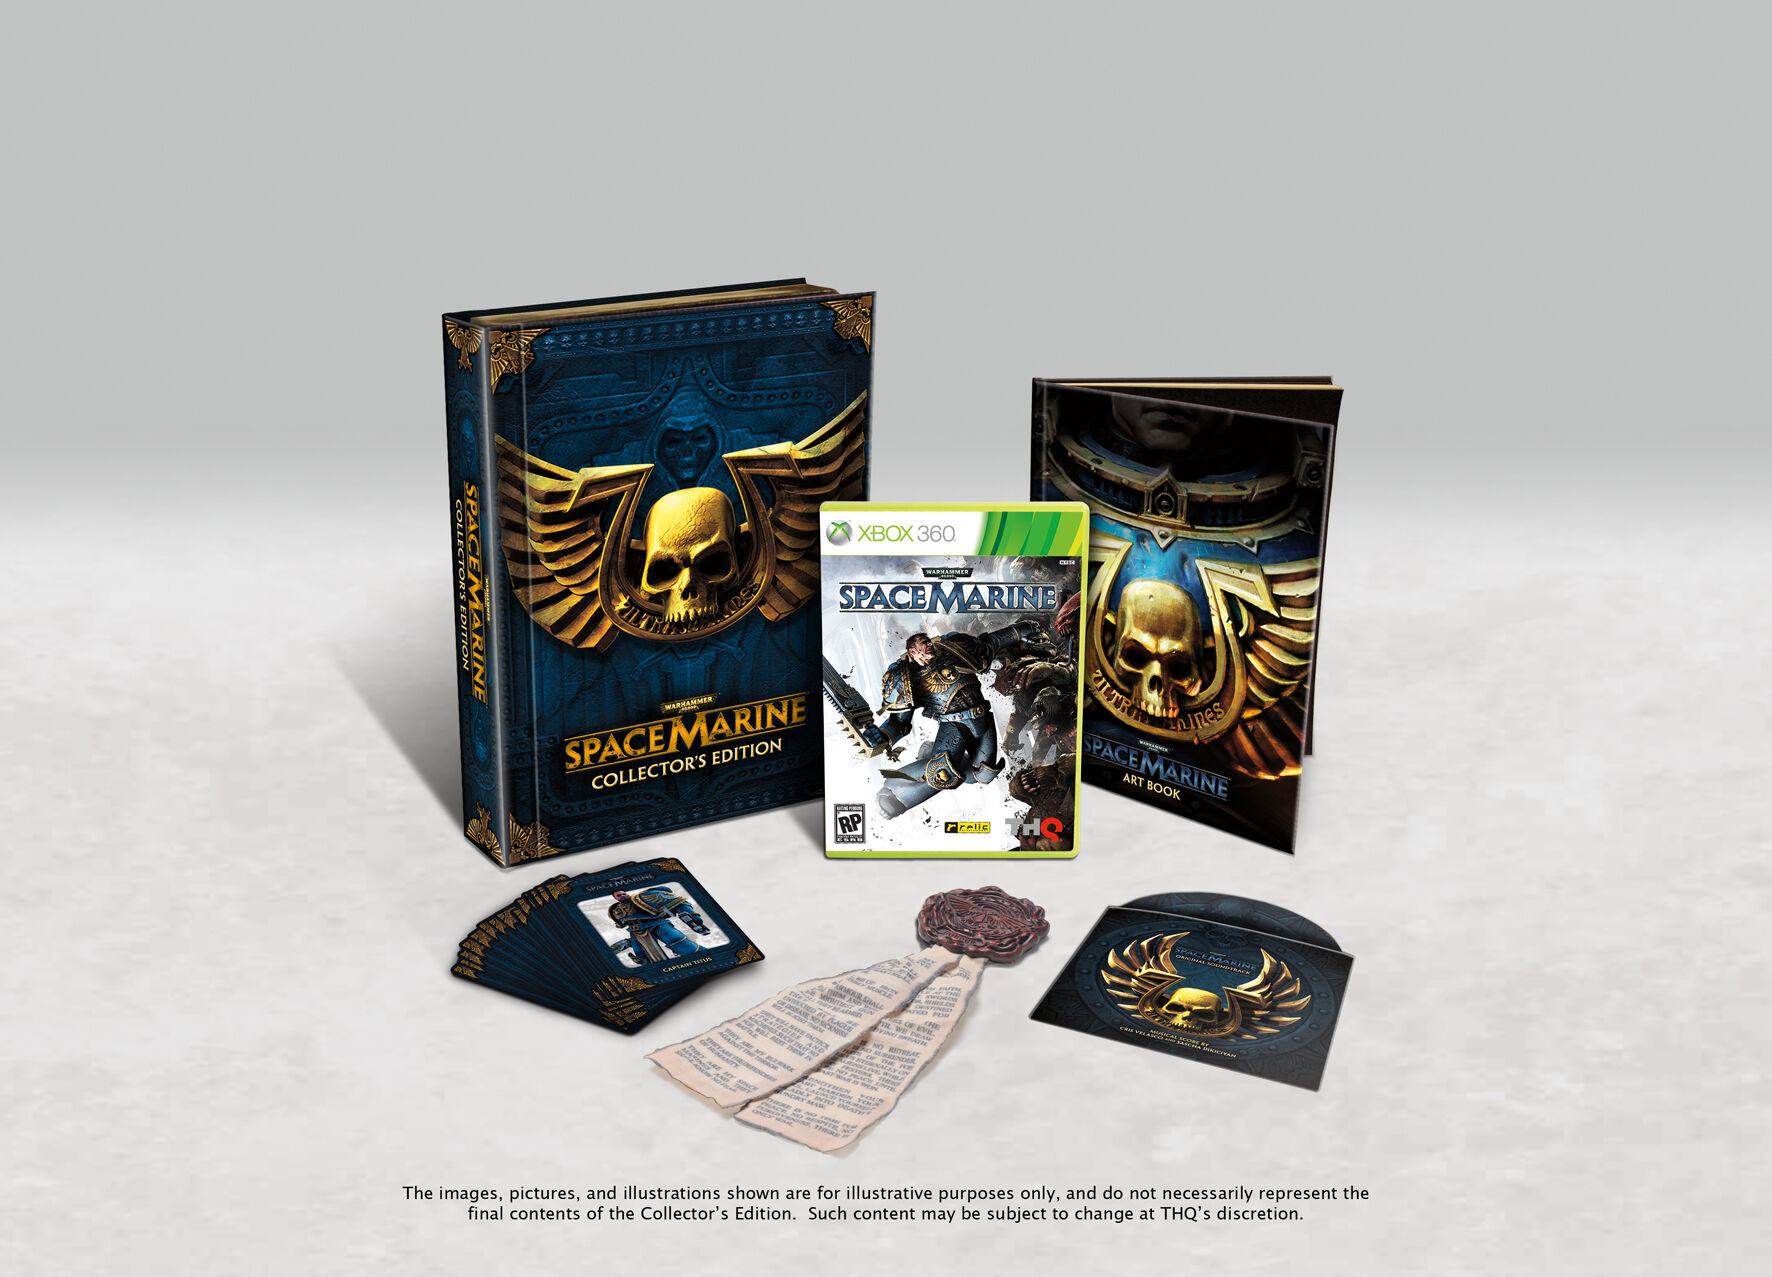 Marine collection. Space Marine коллекционное издание. Warhammer 40,000 коллекционное издание. Xbox 360 Space Marine коллекционное издание. Warhammer 40000 Space Marine collection Edition.